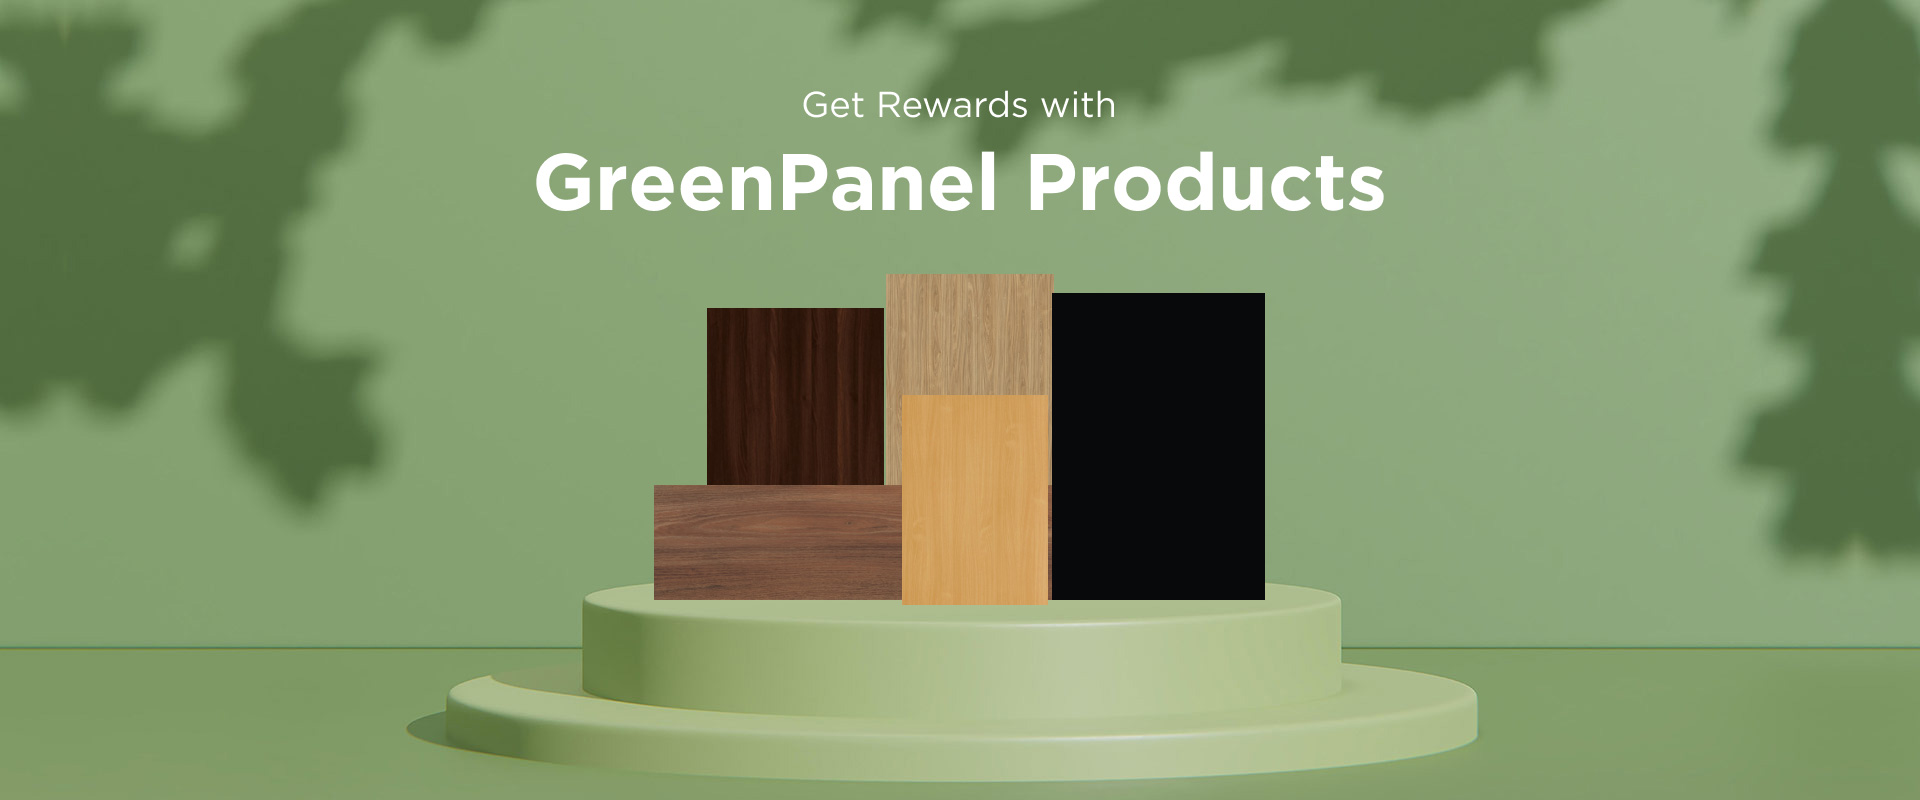 GreenPanel Products